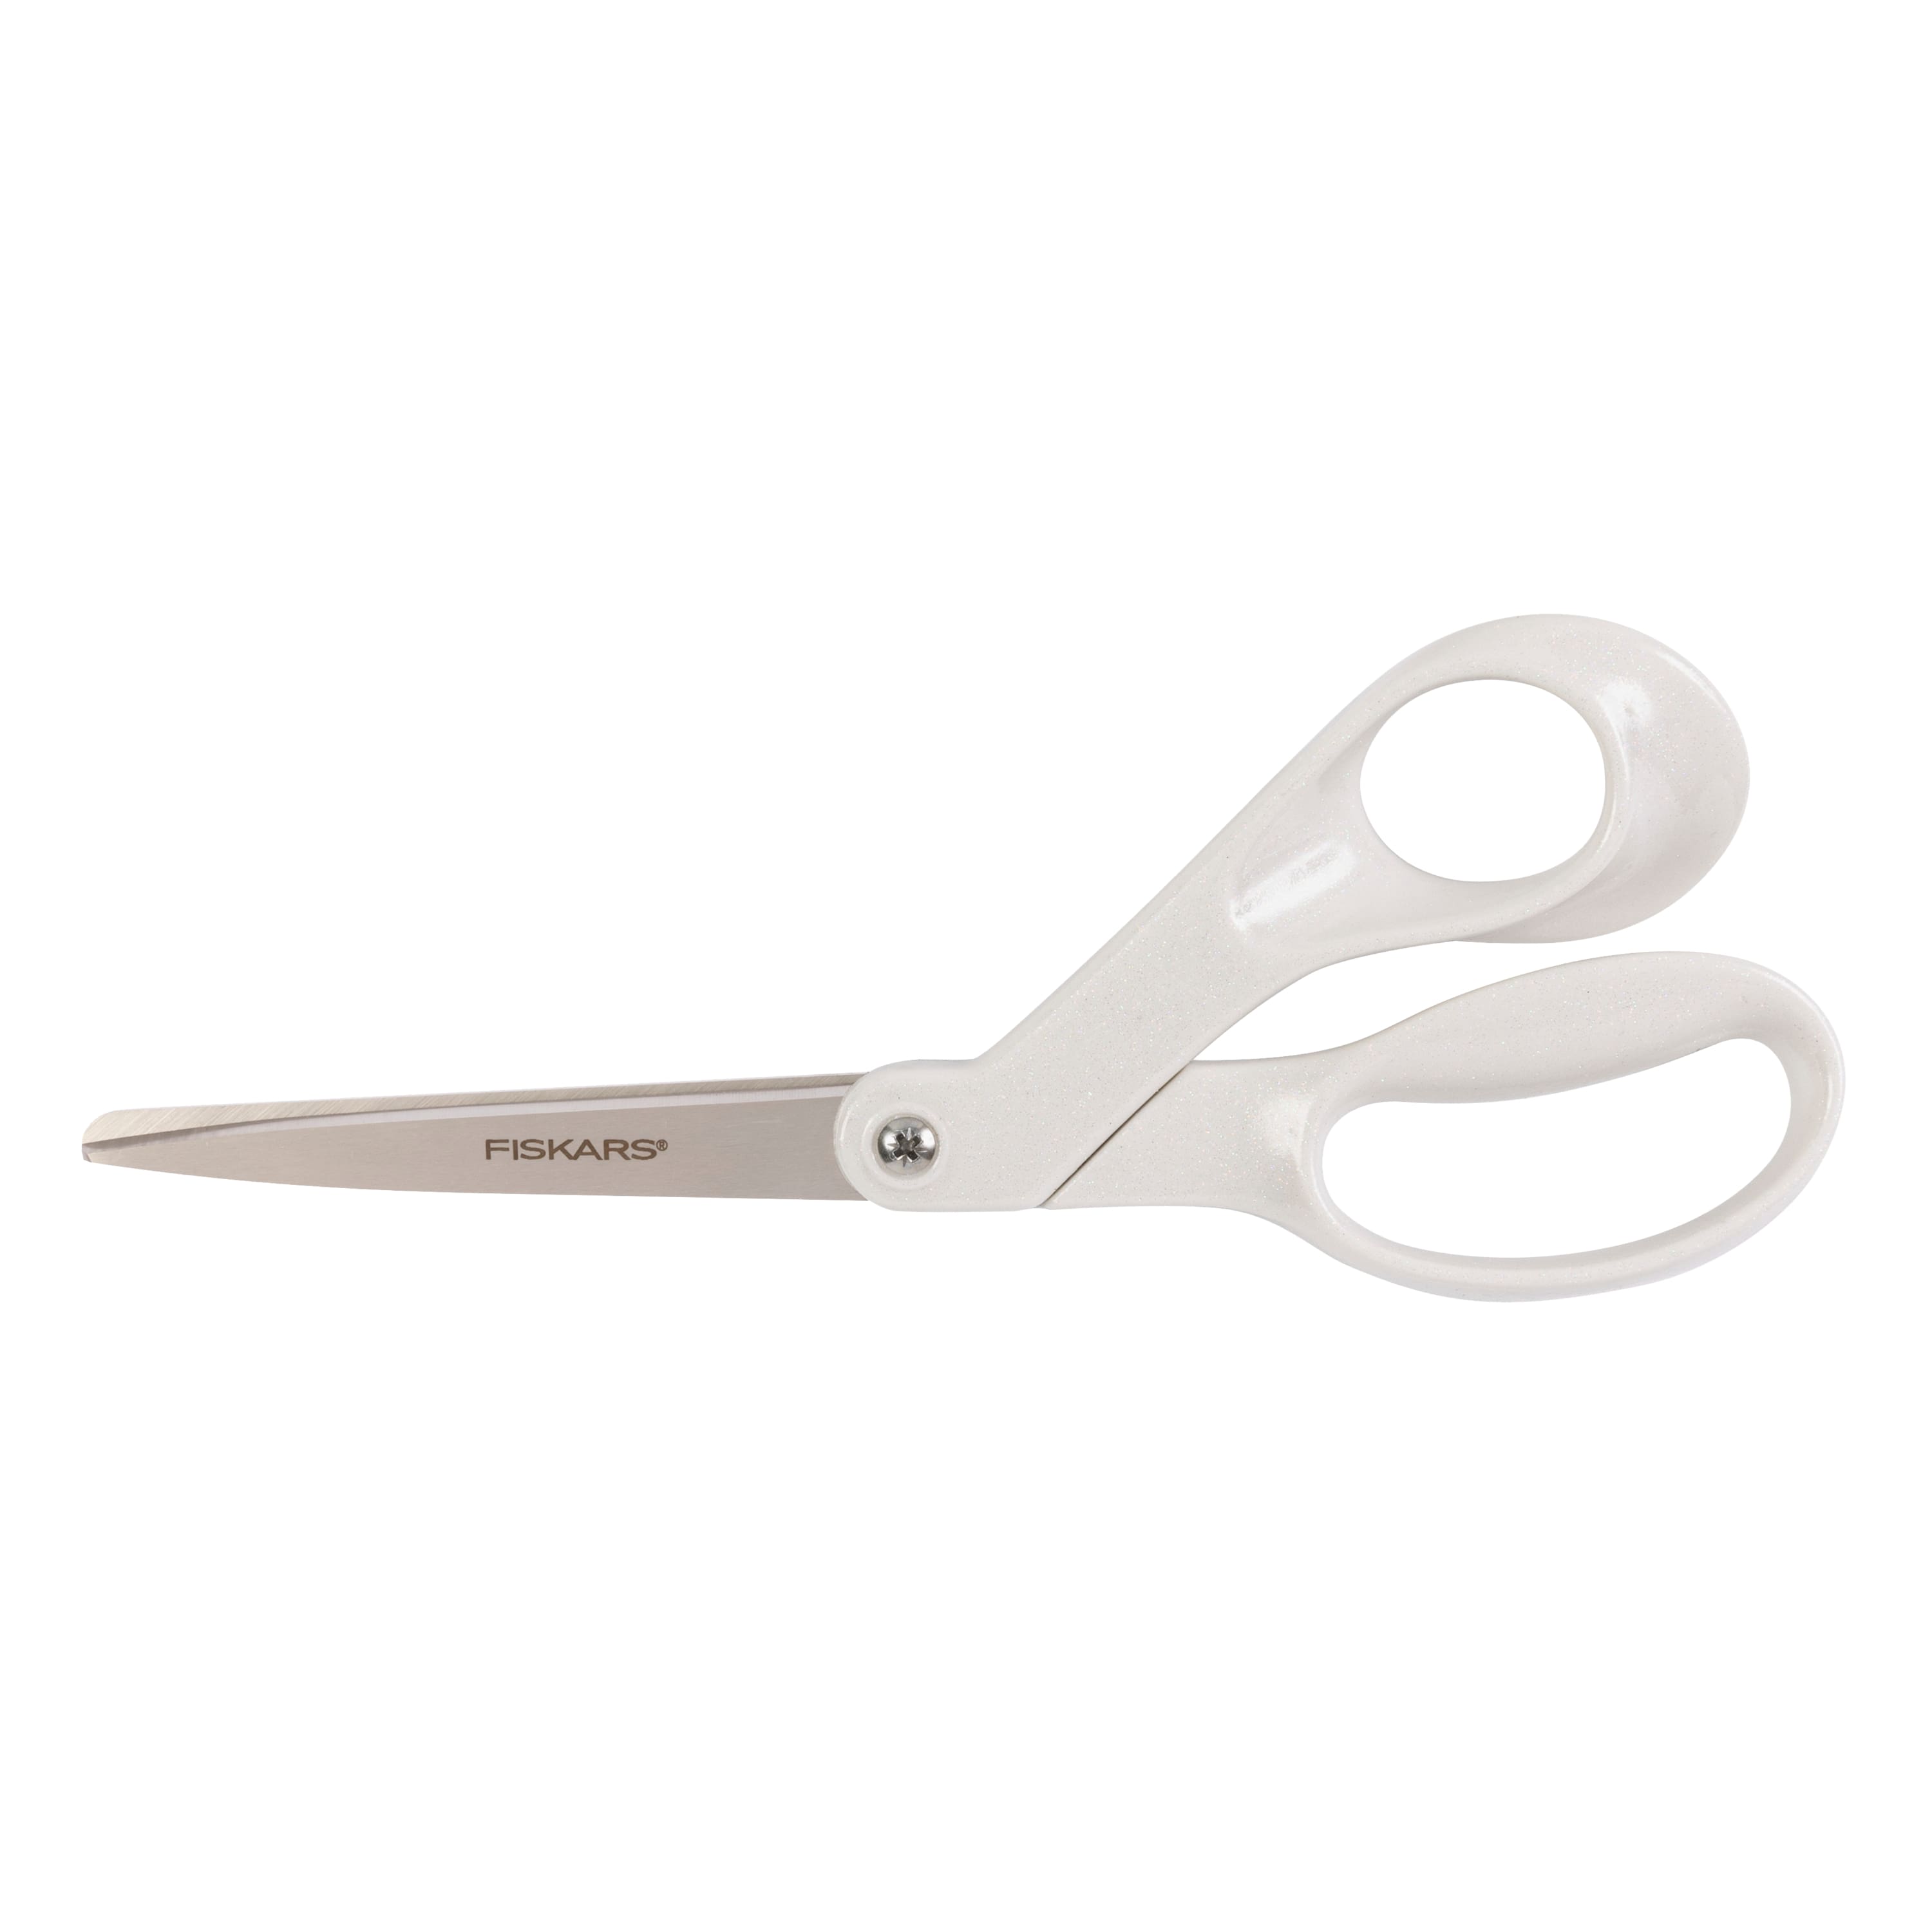 Fiskars All-Purpose Scissors 8 Brand New, Gray, School Supplies